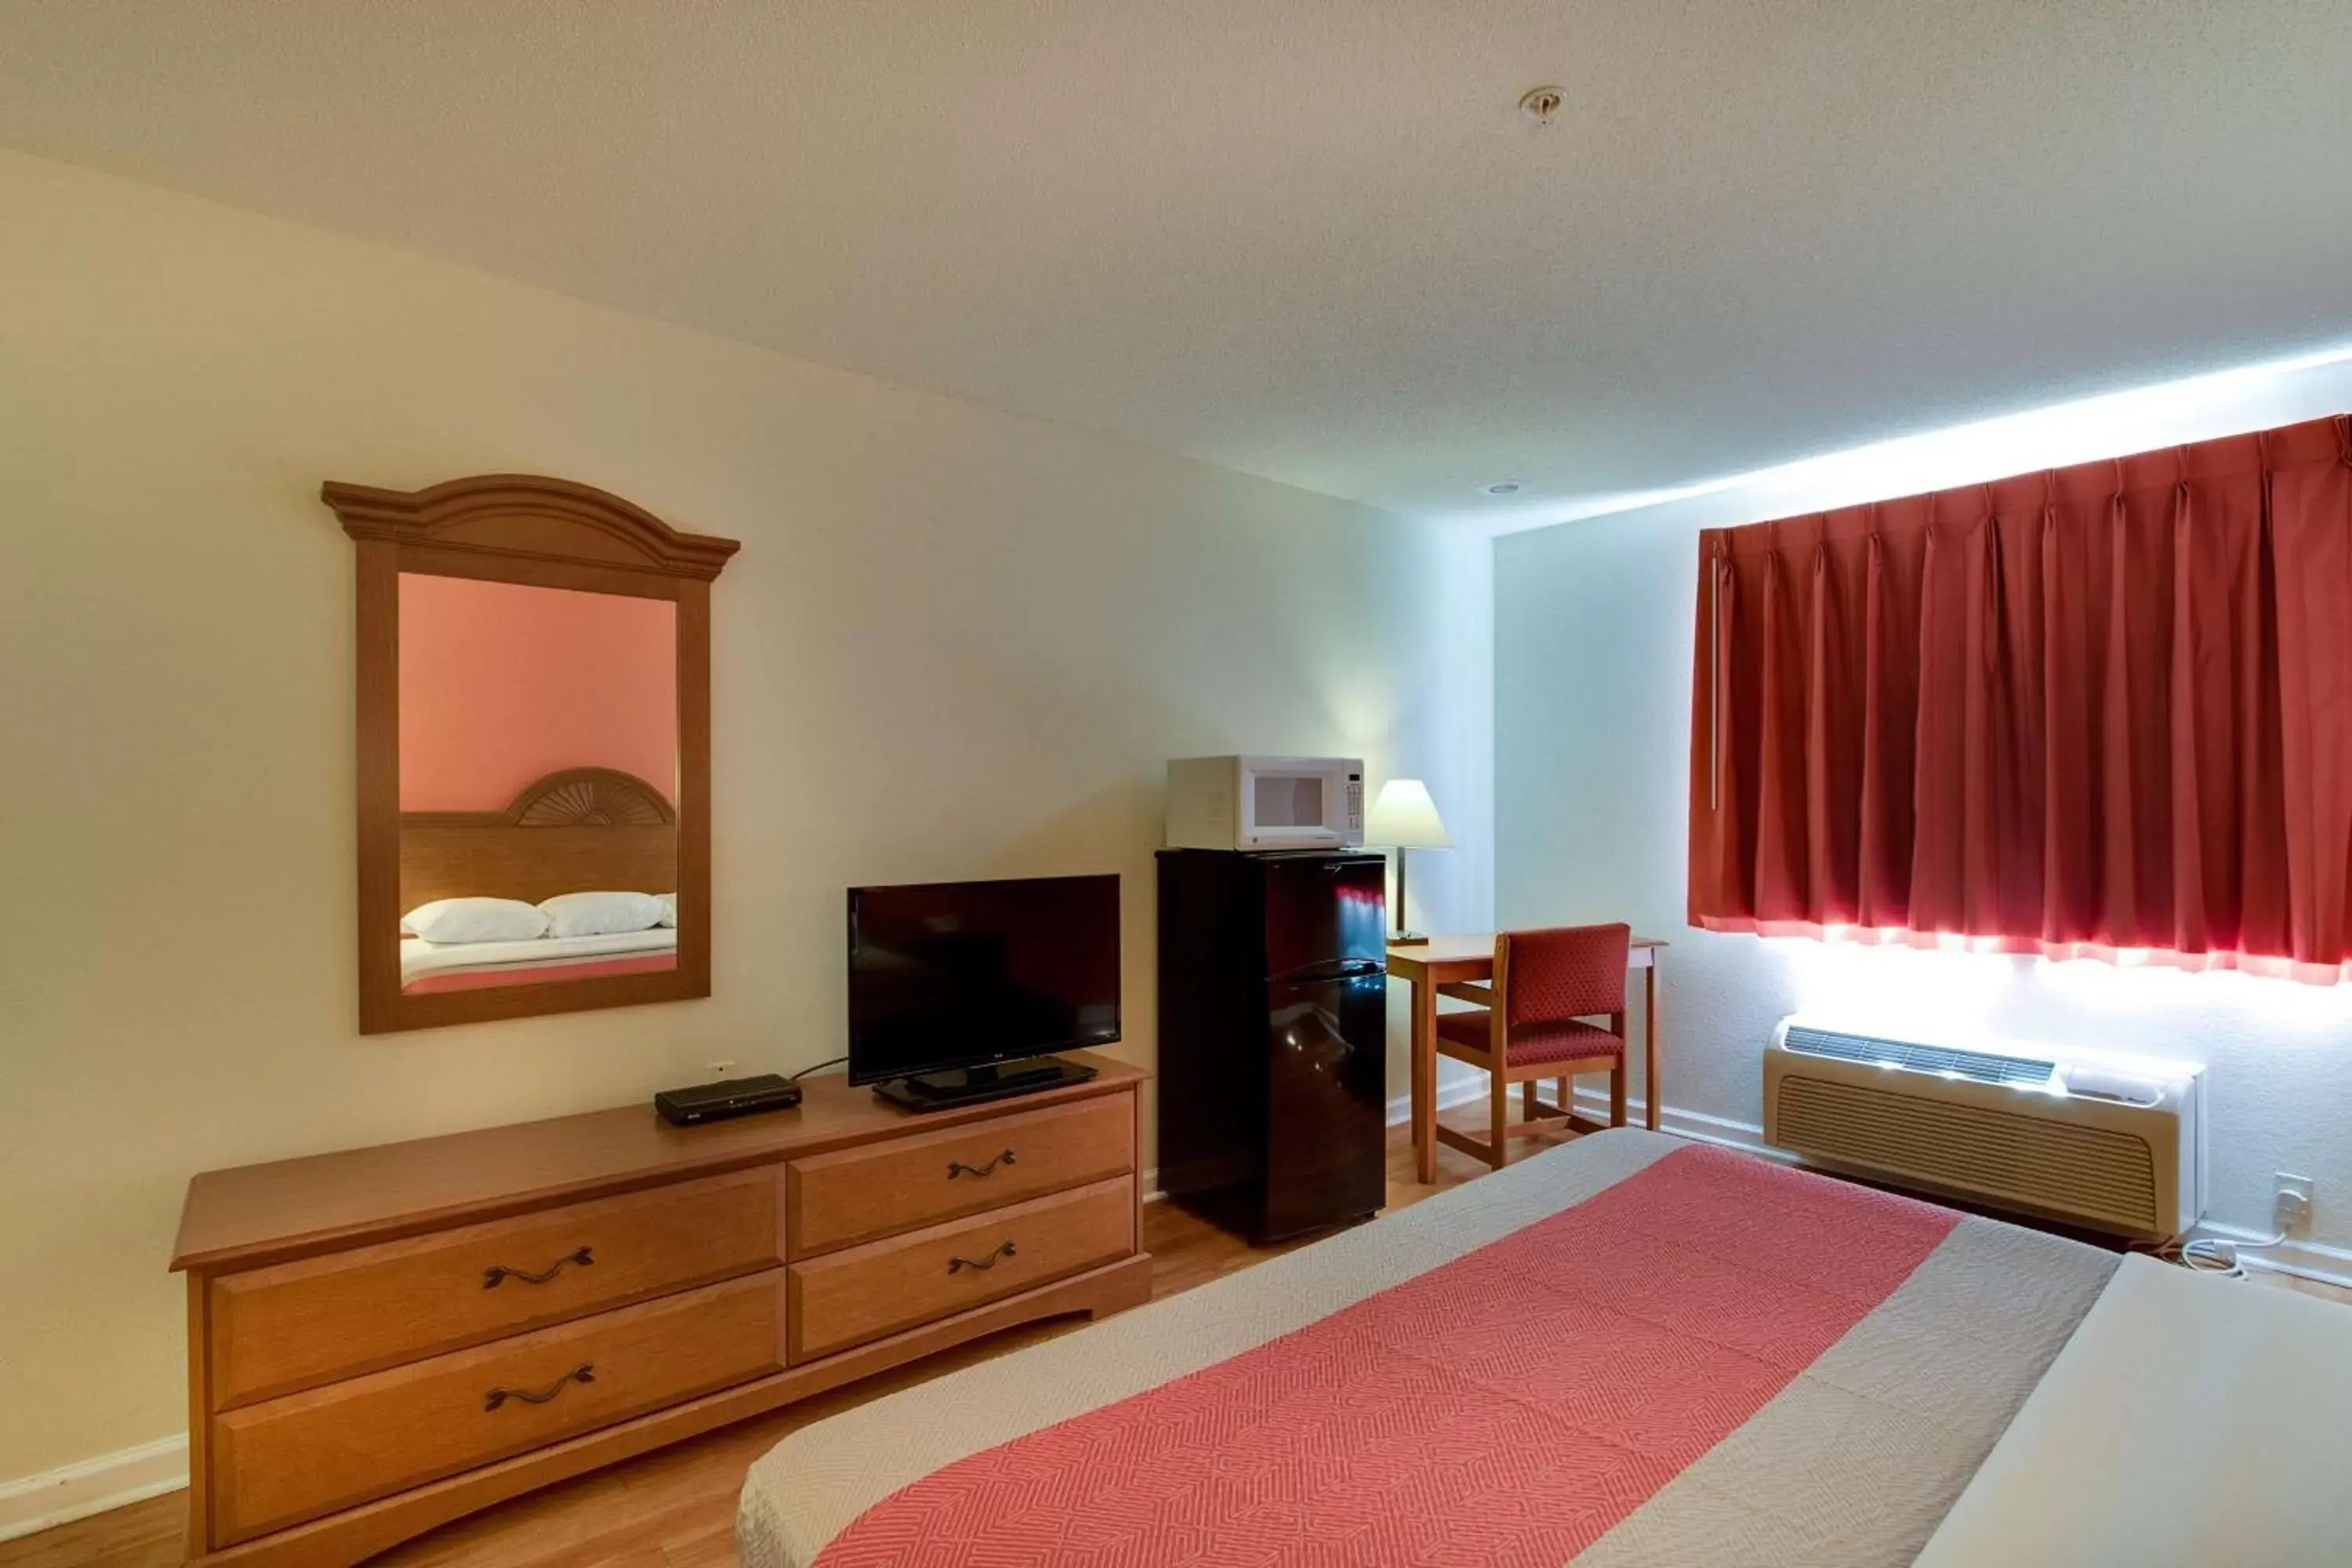 TV and multimedia, Room Photo in Motel 6-Hinesville, GA